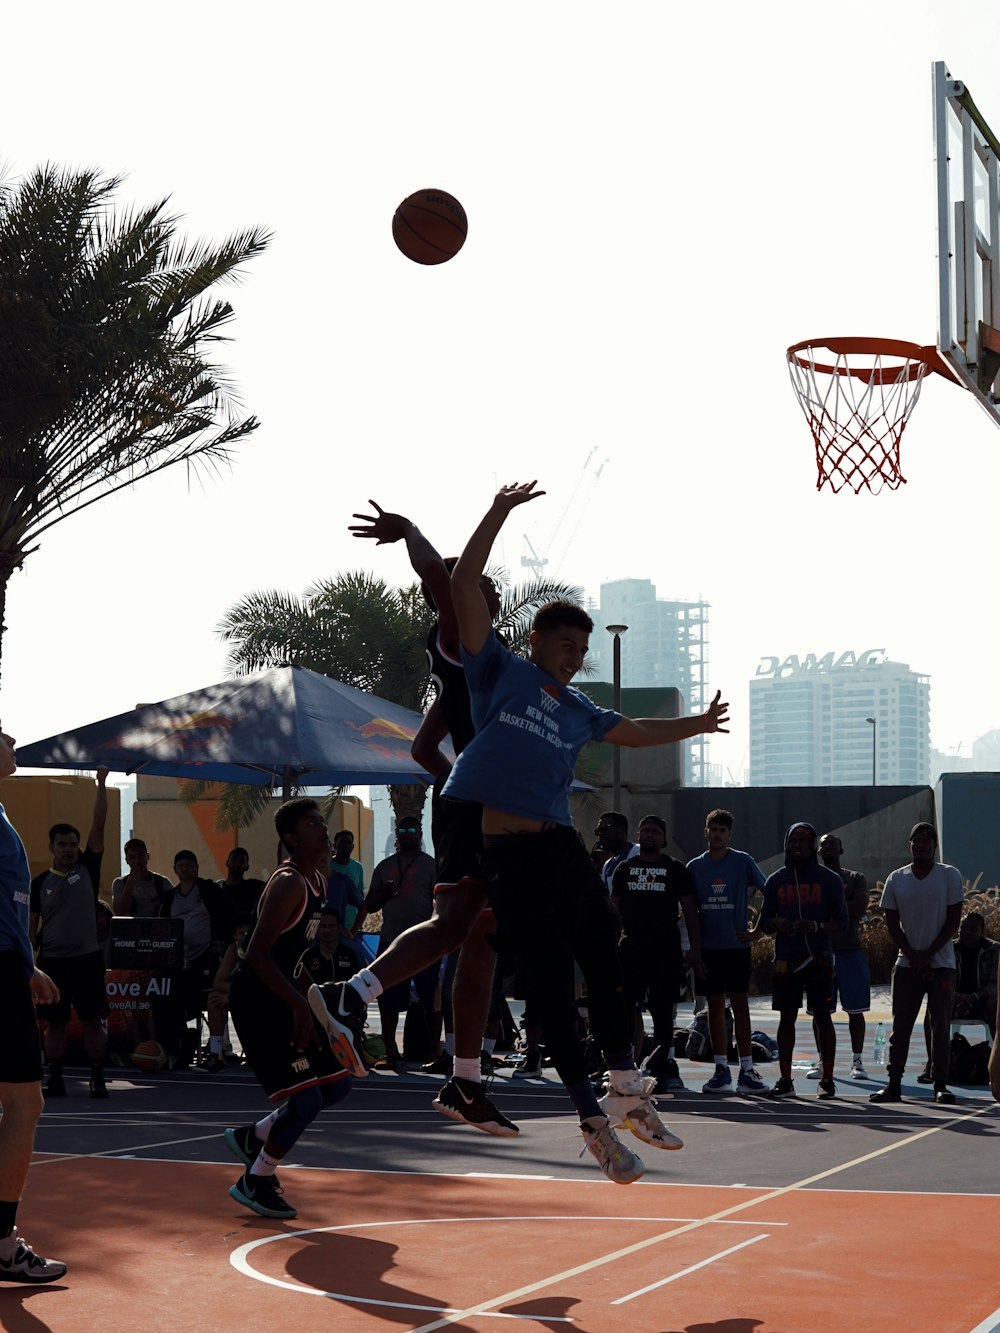 People playing basketball during daytime photo – Free Human Image on  Unsplash